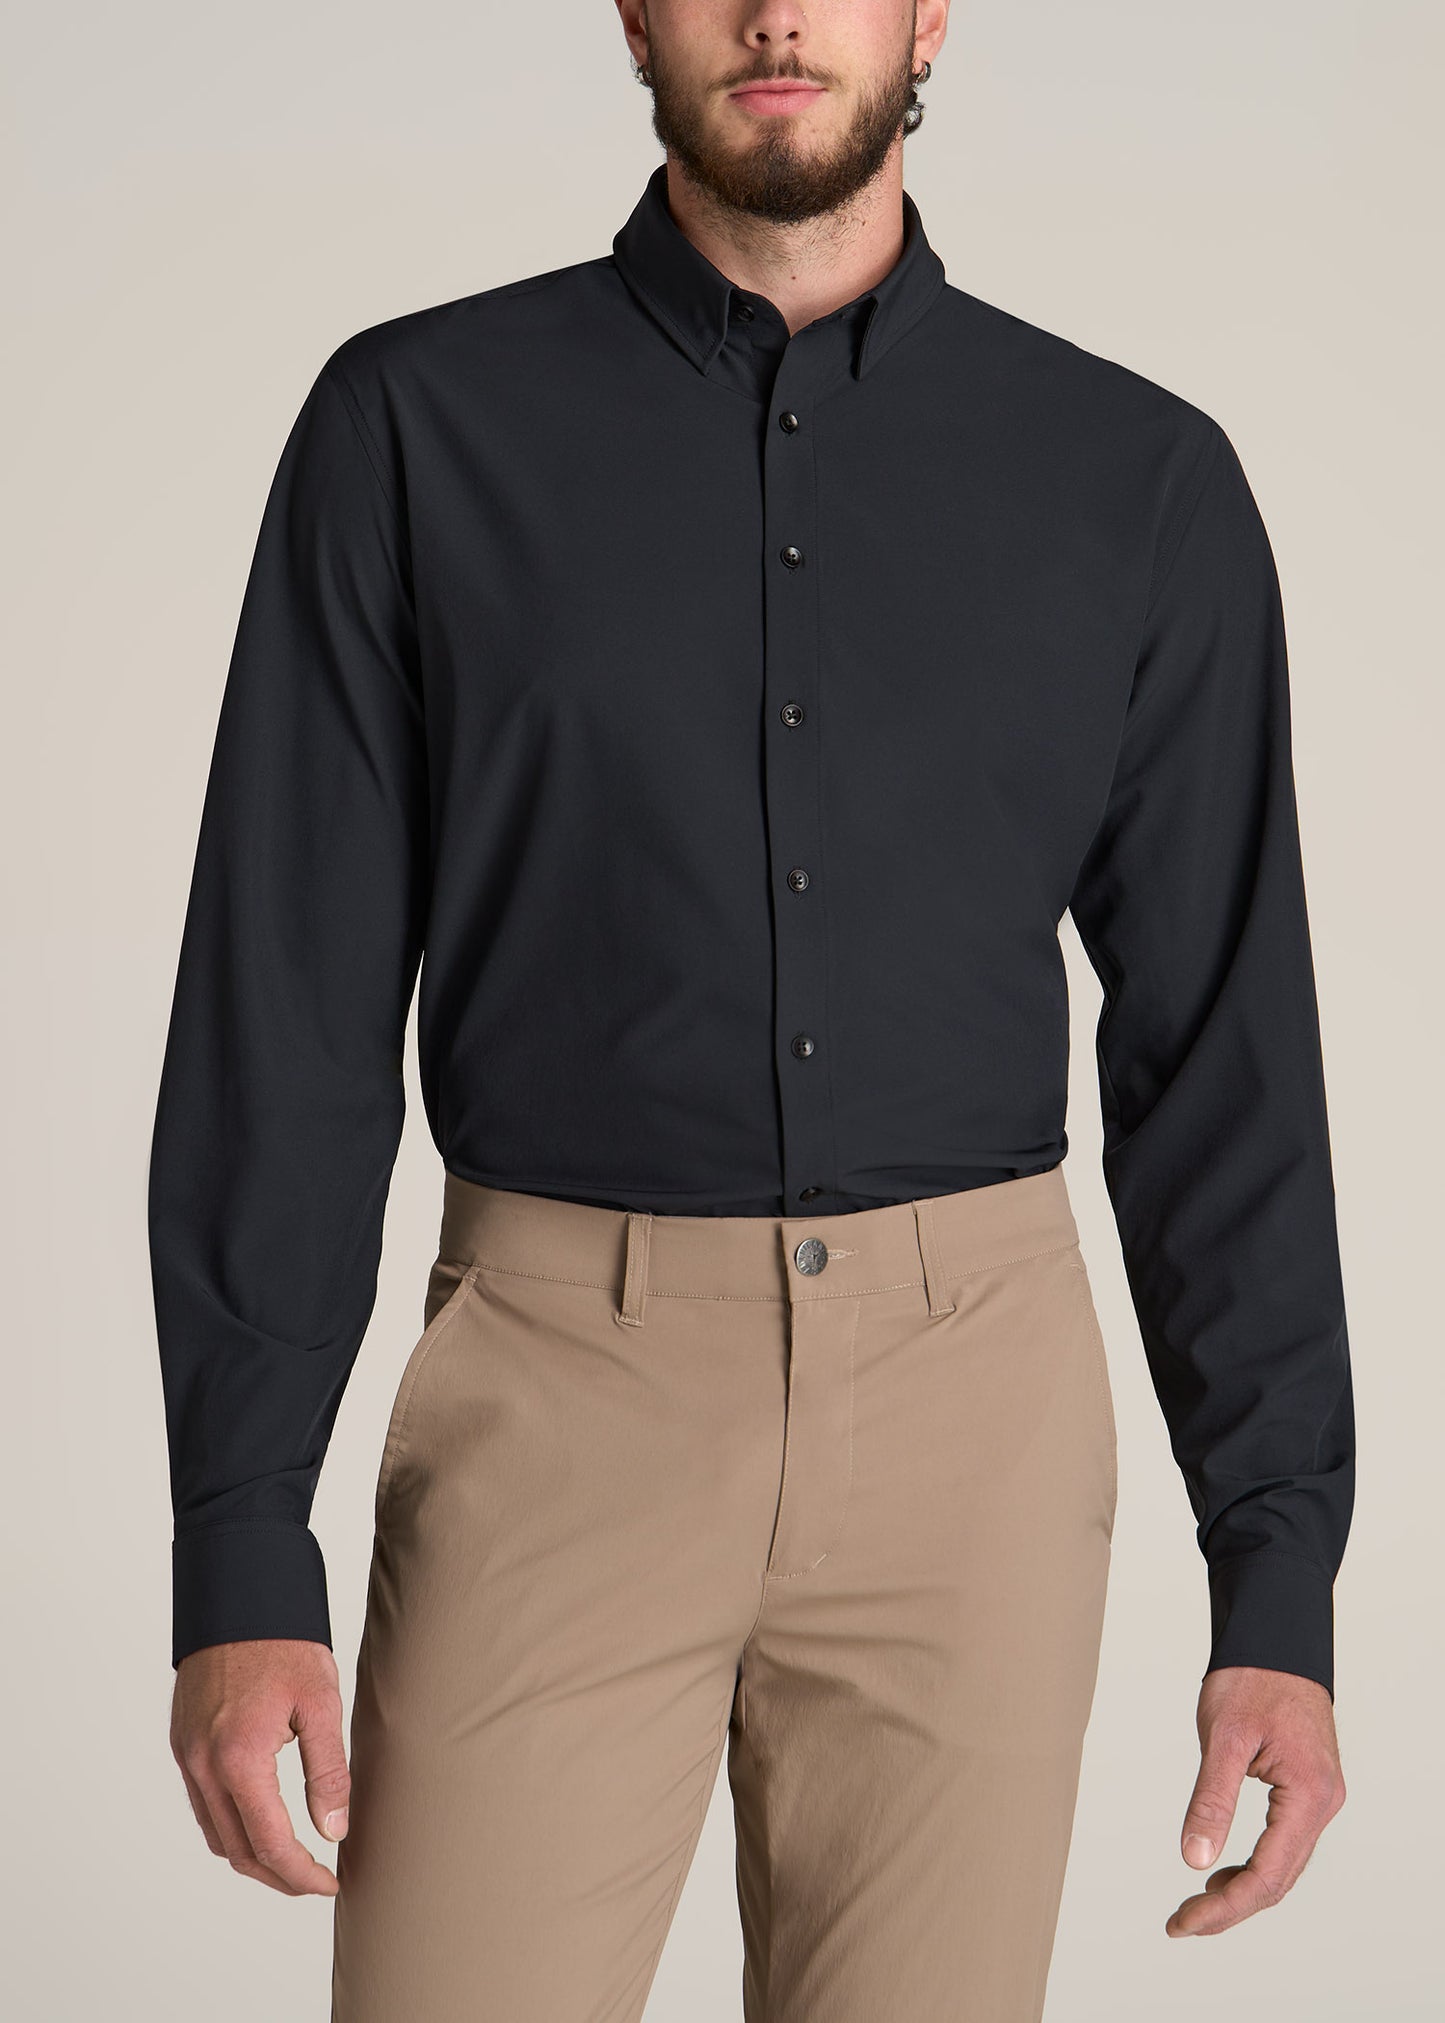 American-Tall-Men-Traveler-Stretch-Dress-Shirt-Black-Front